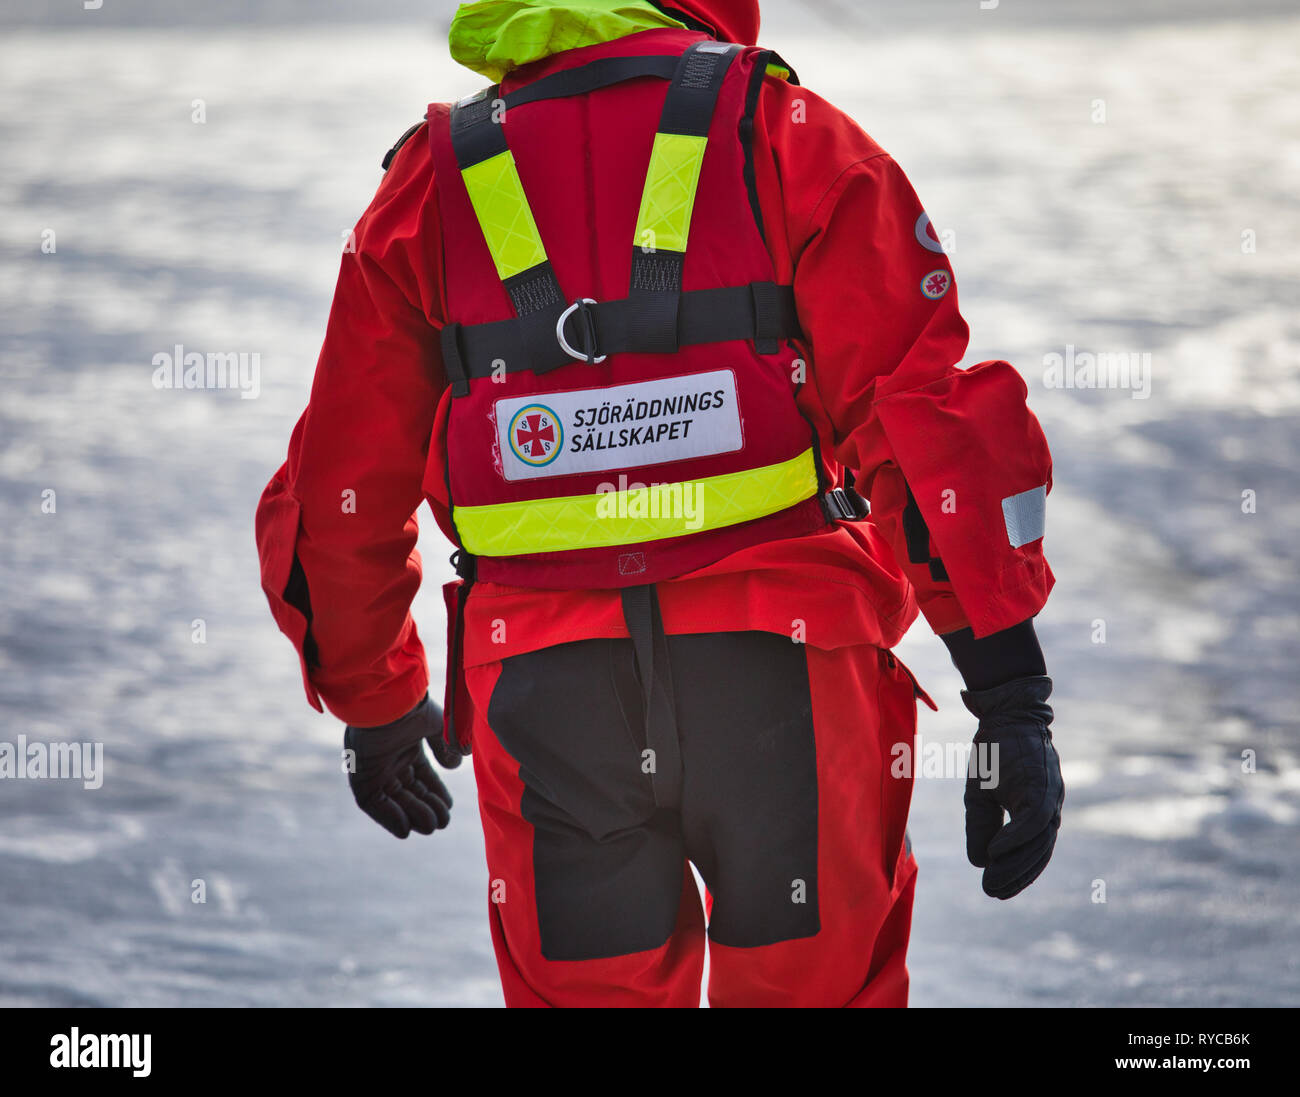 Volunteer from the Swedish Sea Rescue Society (Sjoraddnings Sallskapet) walking on frozen Lake Malaren, Sweden, Scandinavia Stock Photo